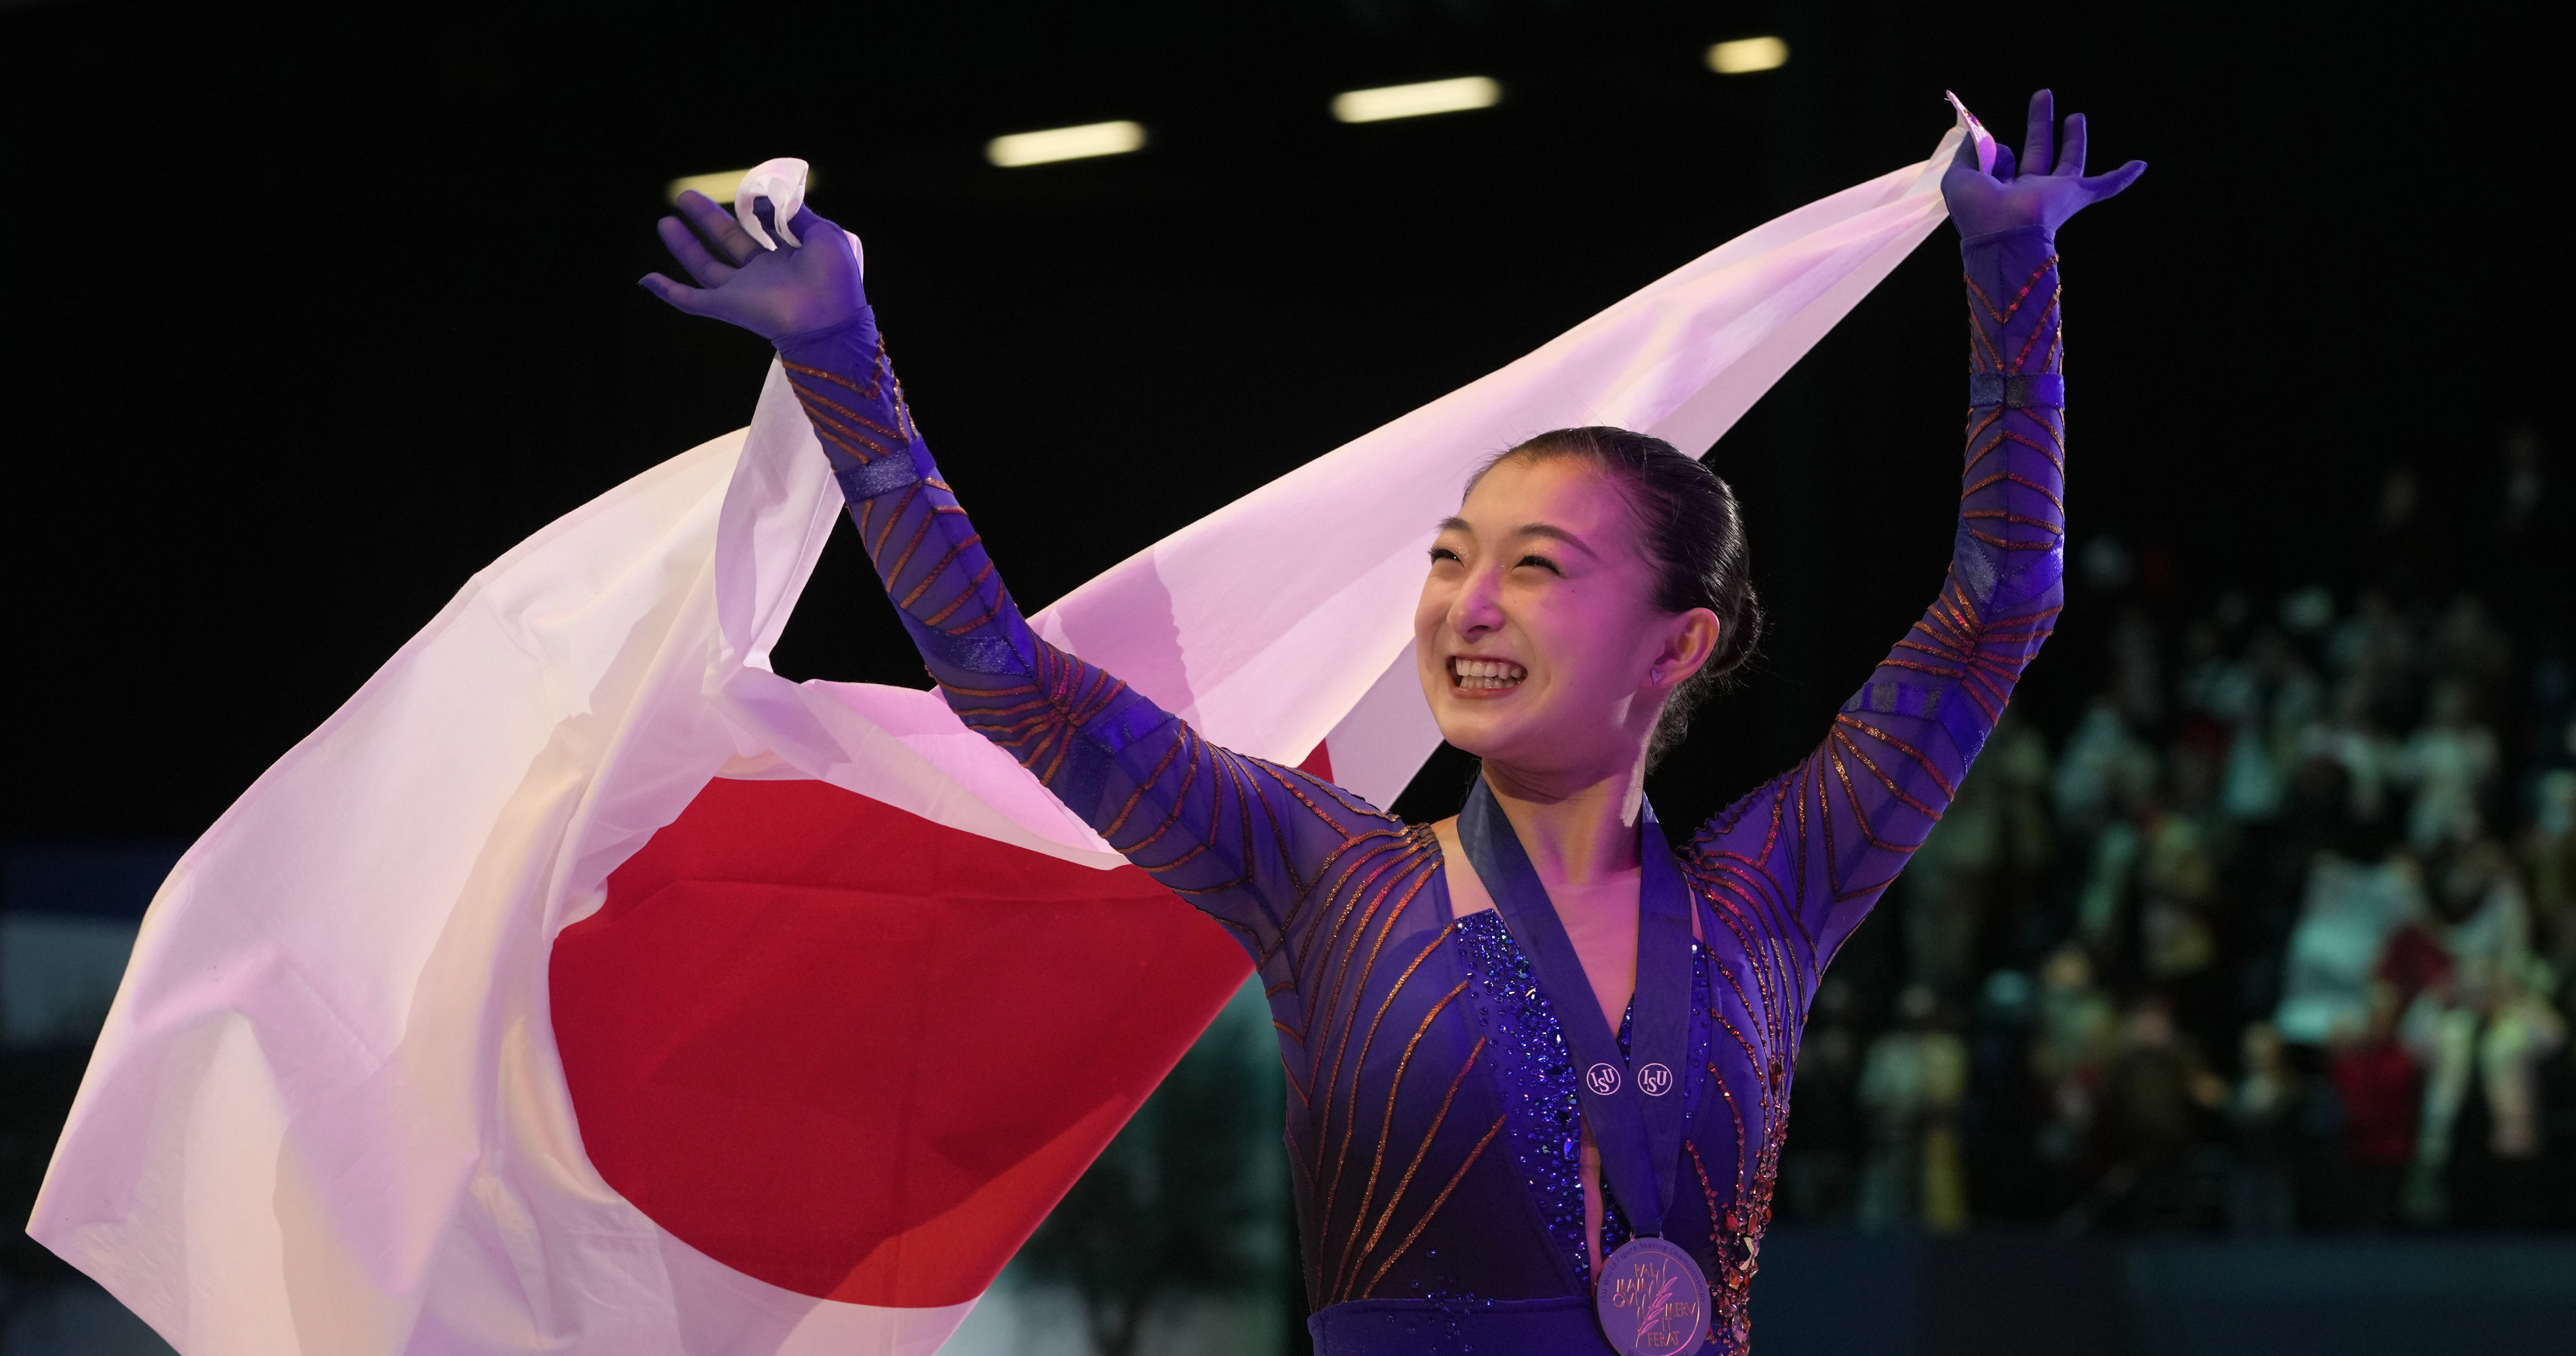 Kaori Sakamoto Wins Women's Title at World Figure Skating Championships